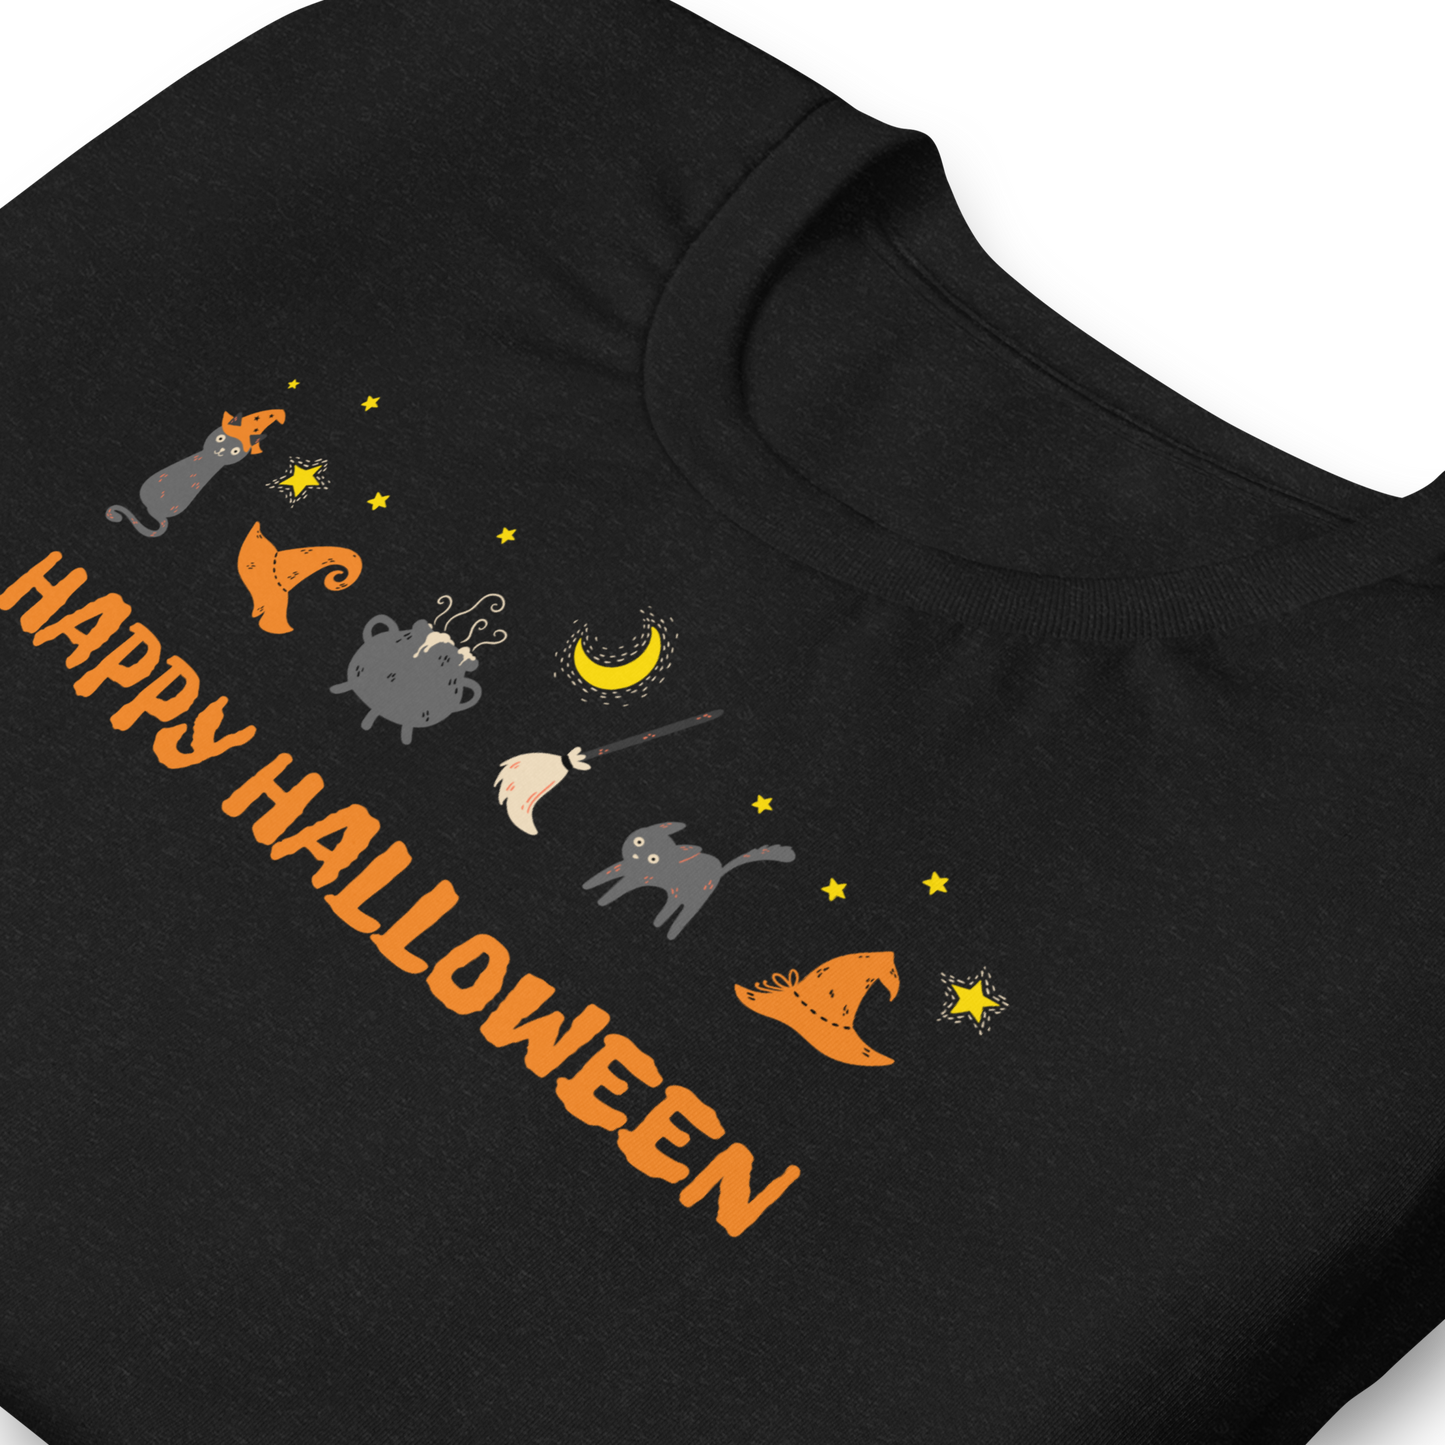 Unisex - Halloween Kitty Kats, Witch Hats, Cauldron Splats and Sweepy ... Brats? - Funny T-shirt